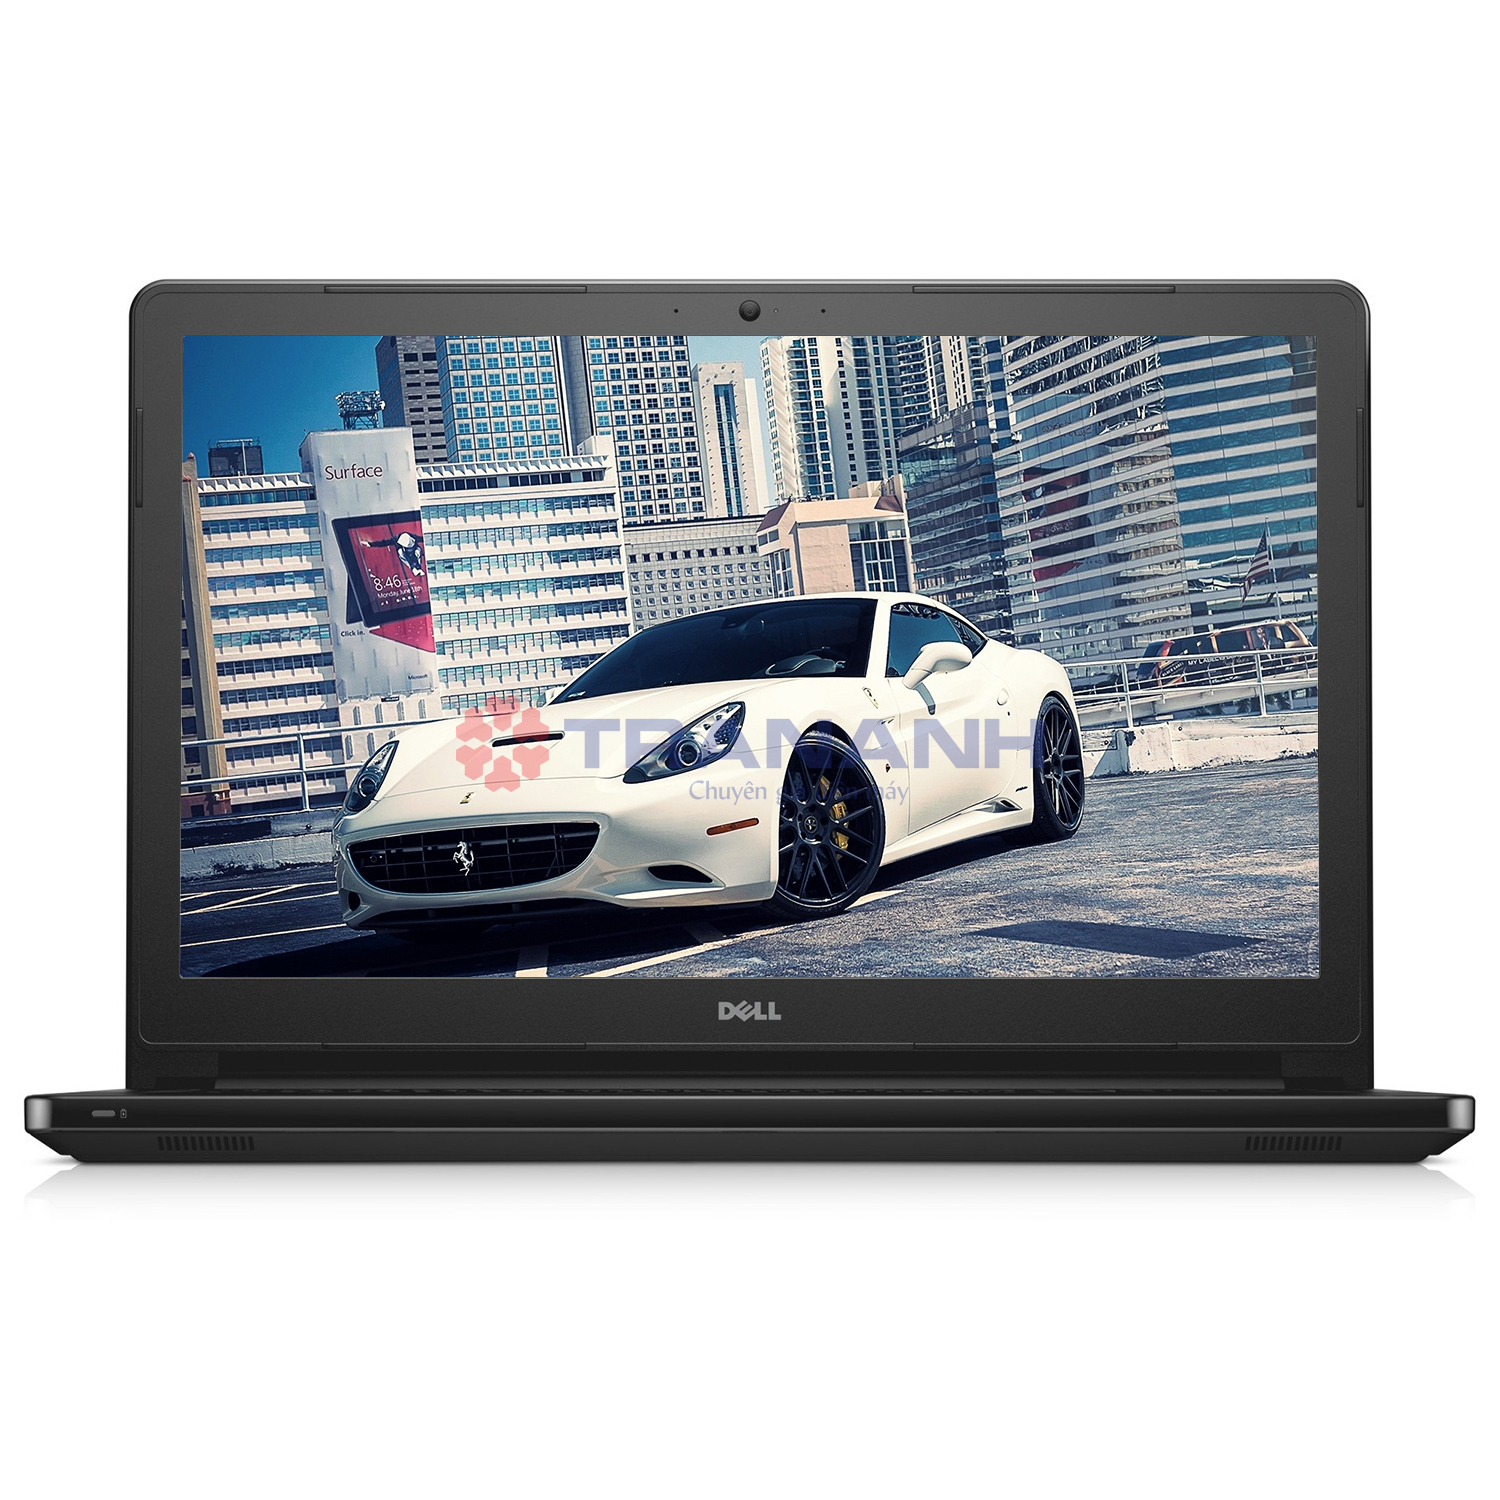 Laptop Dell Inspiron 3558 P9DYT1 - Intel Core i5-5200U 2.2 GHz, 4GB RAM, HDD 1TB, Intel HD Graphics 5500, 15.6 inch